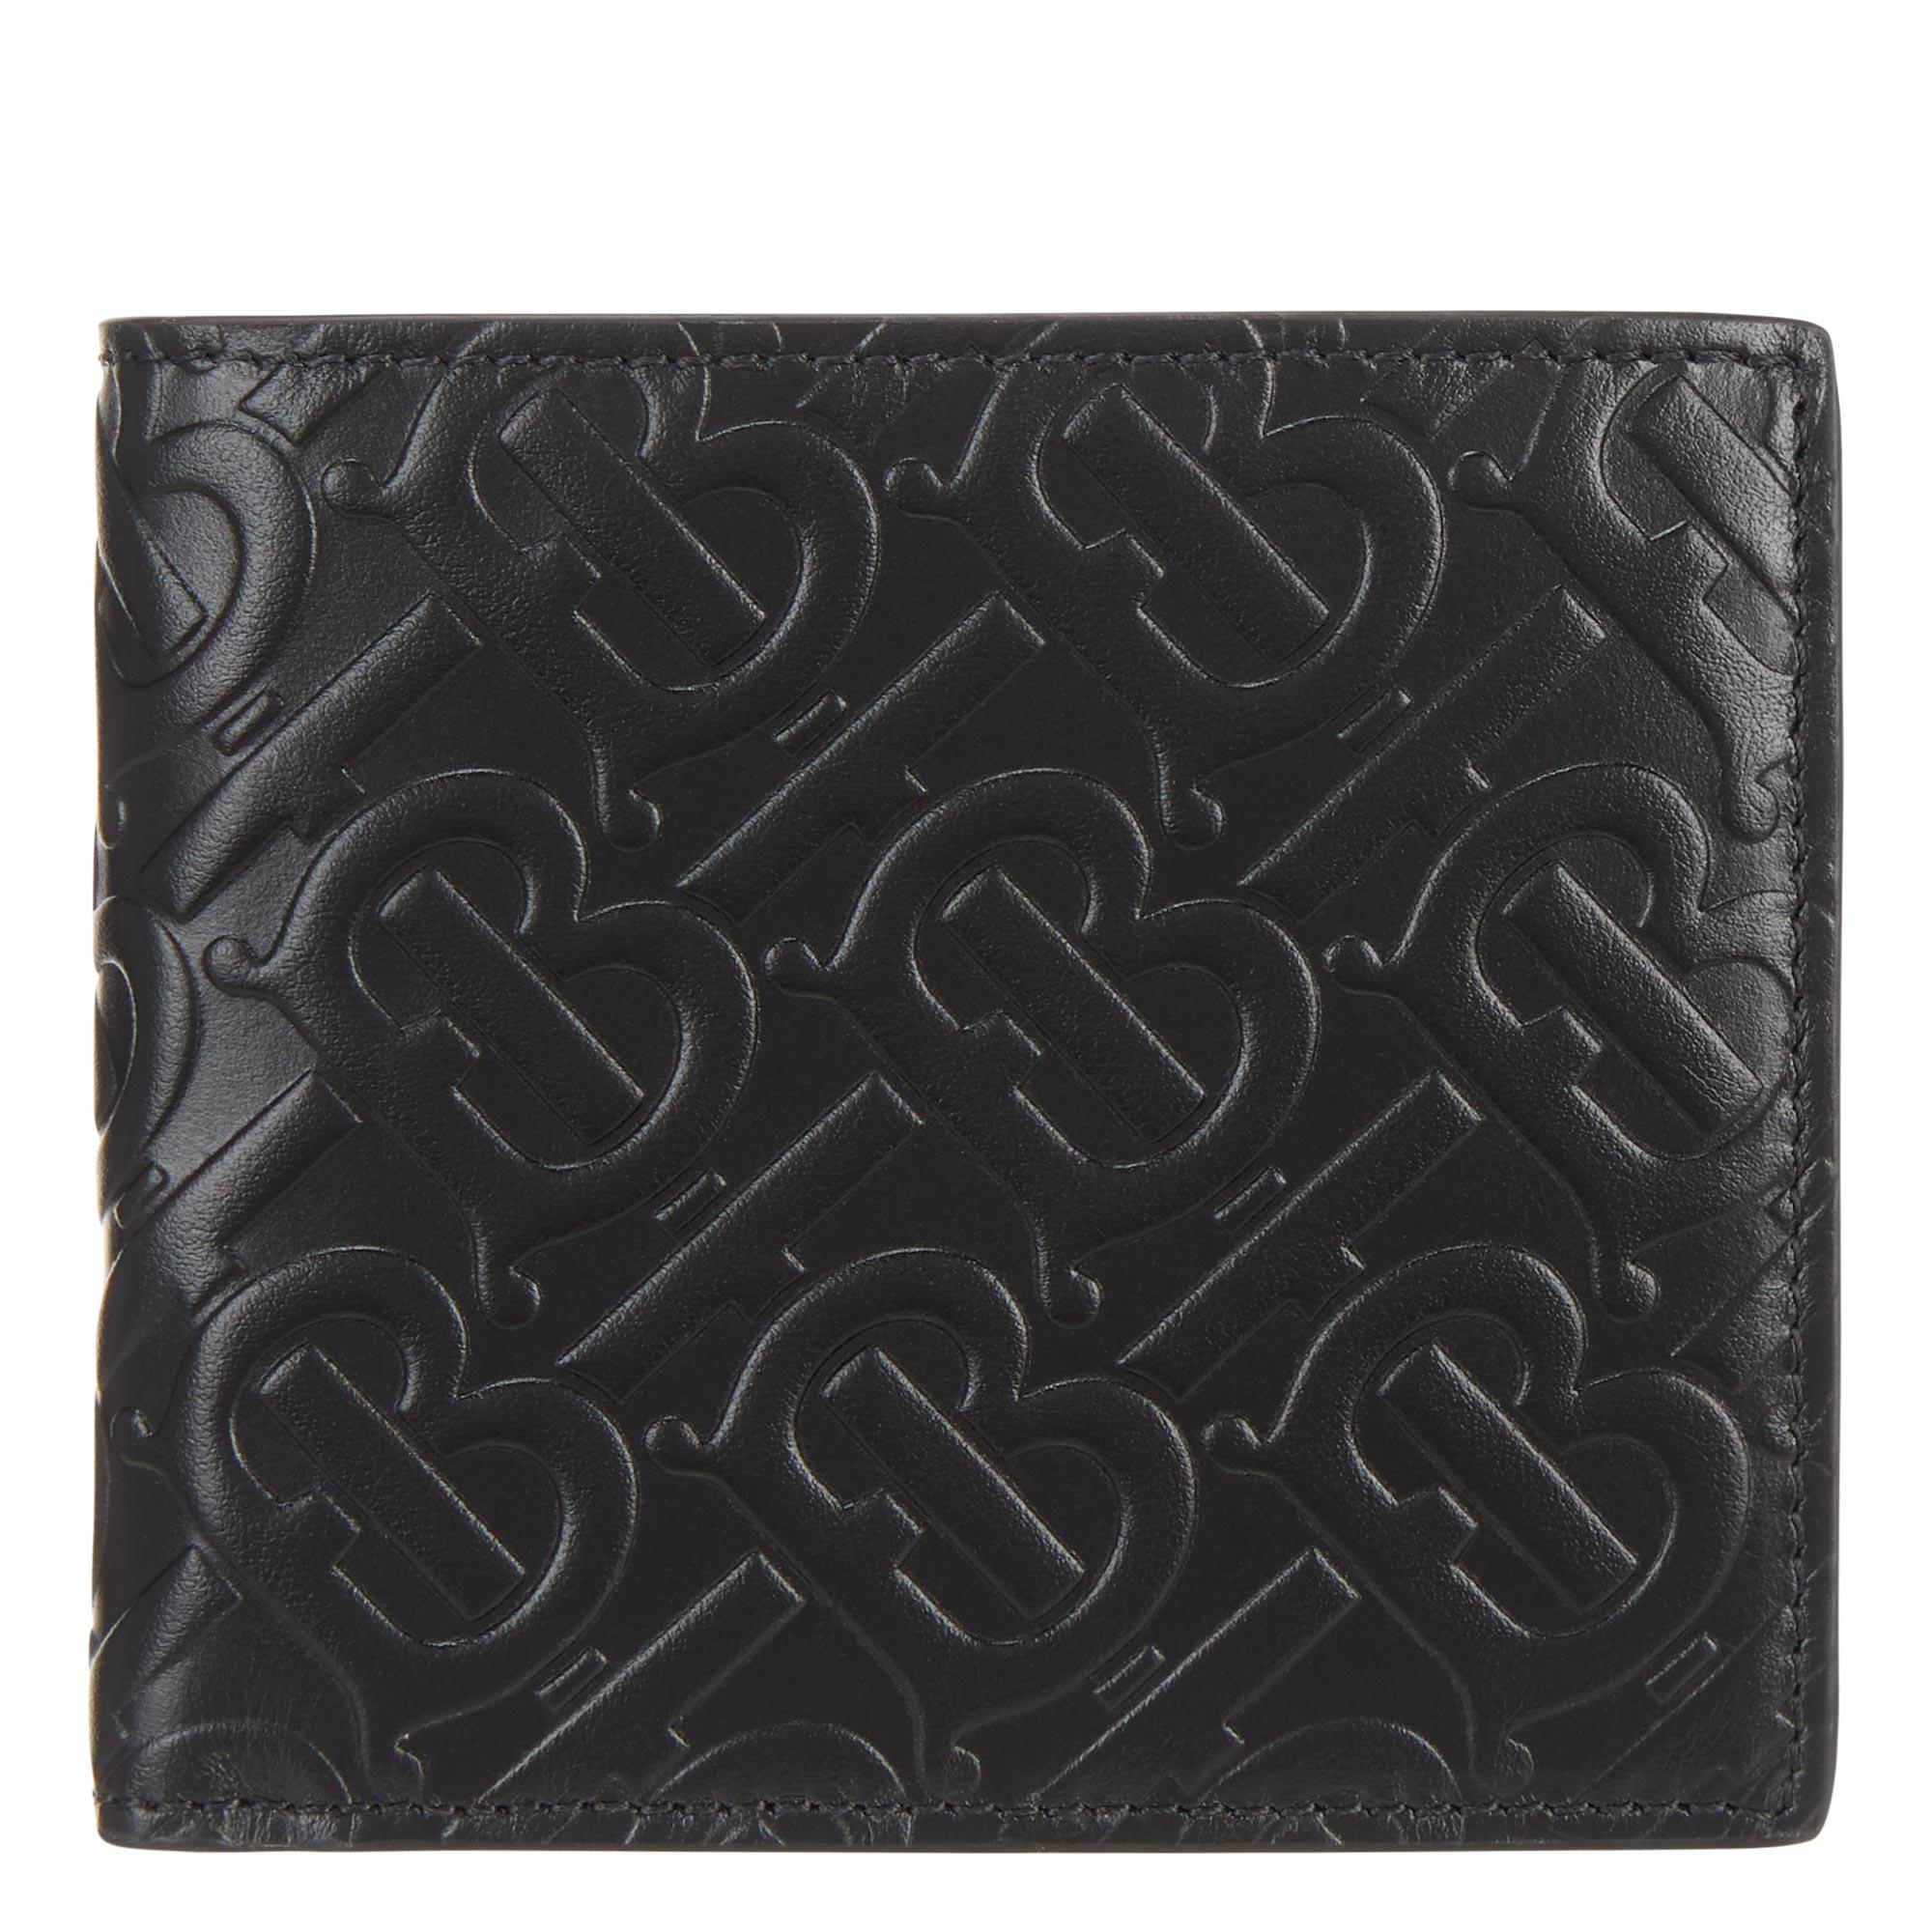 TB Monogram Leather Wallet